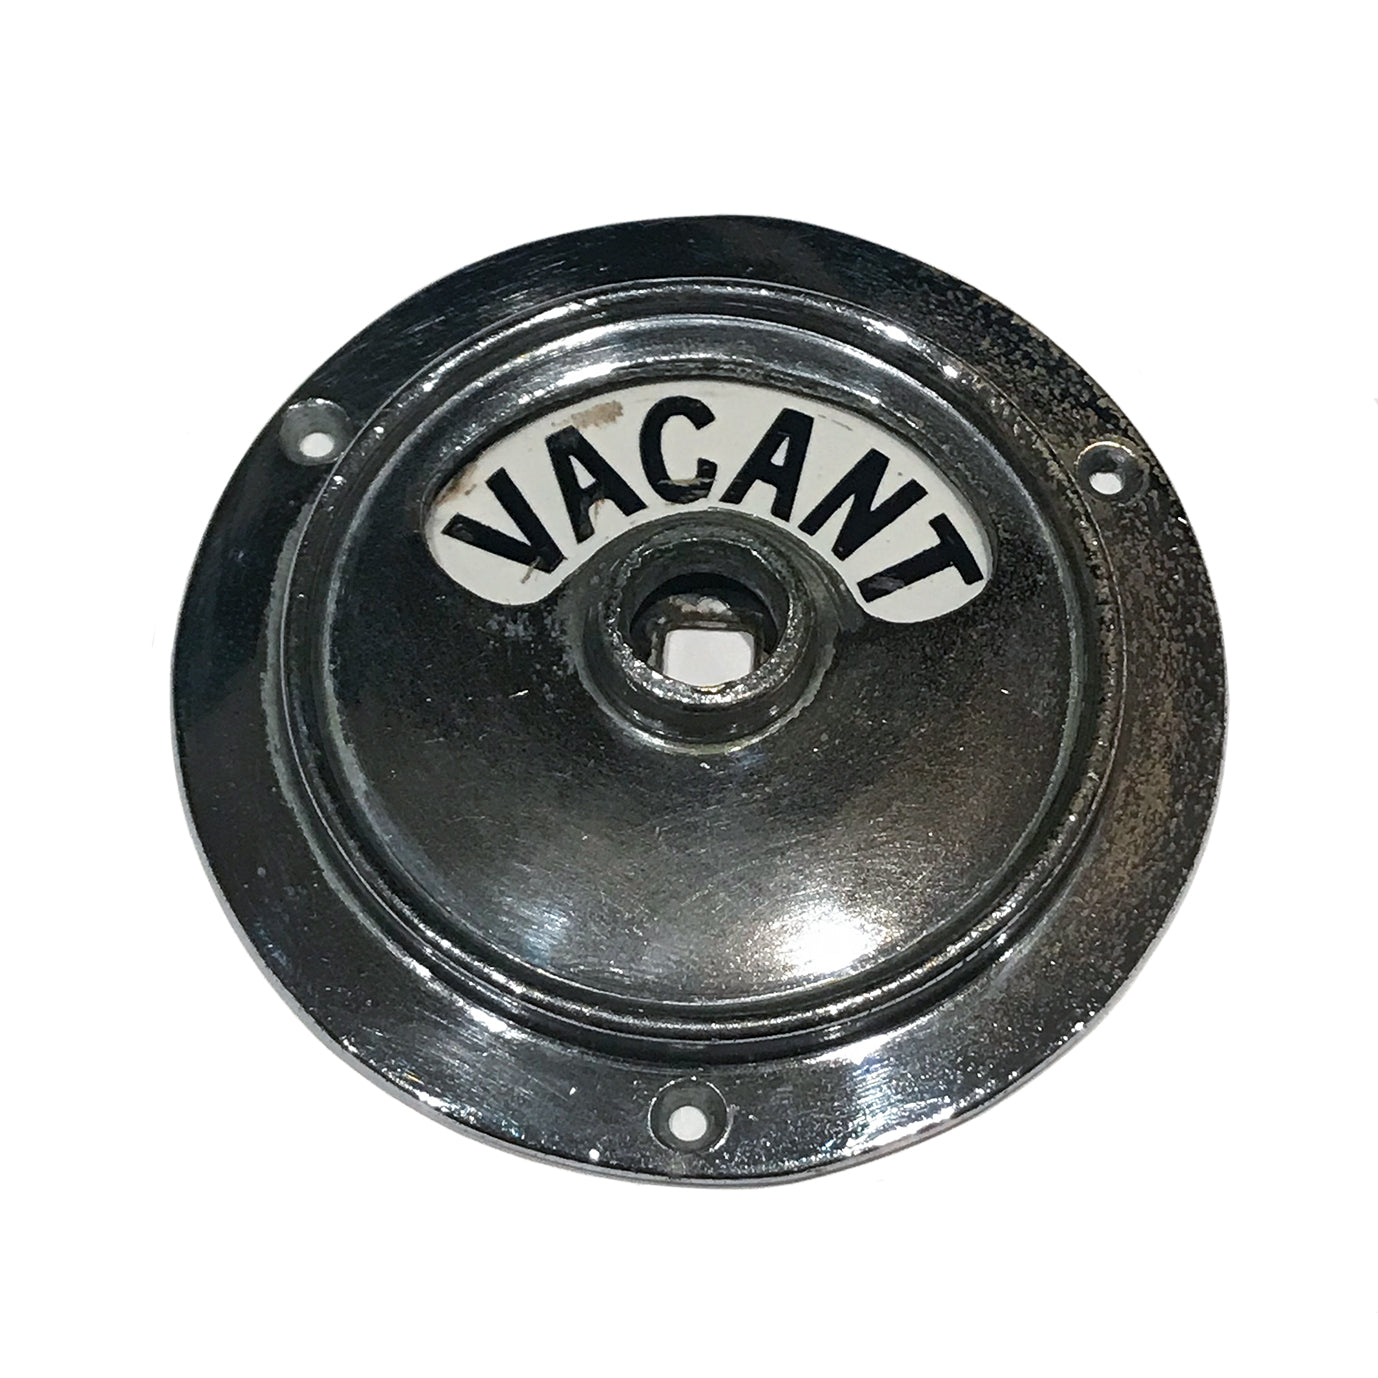 Original 1930s Art Deco chrome toilet Vacant/Engaged lock. SHOP NOW - www.intovintage.co.uk